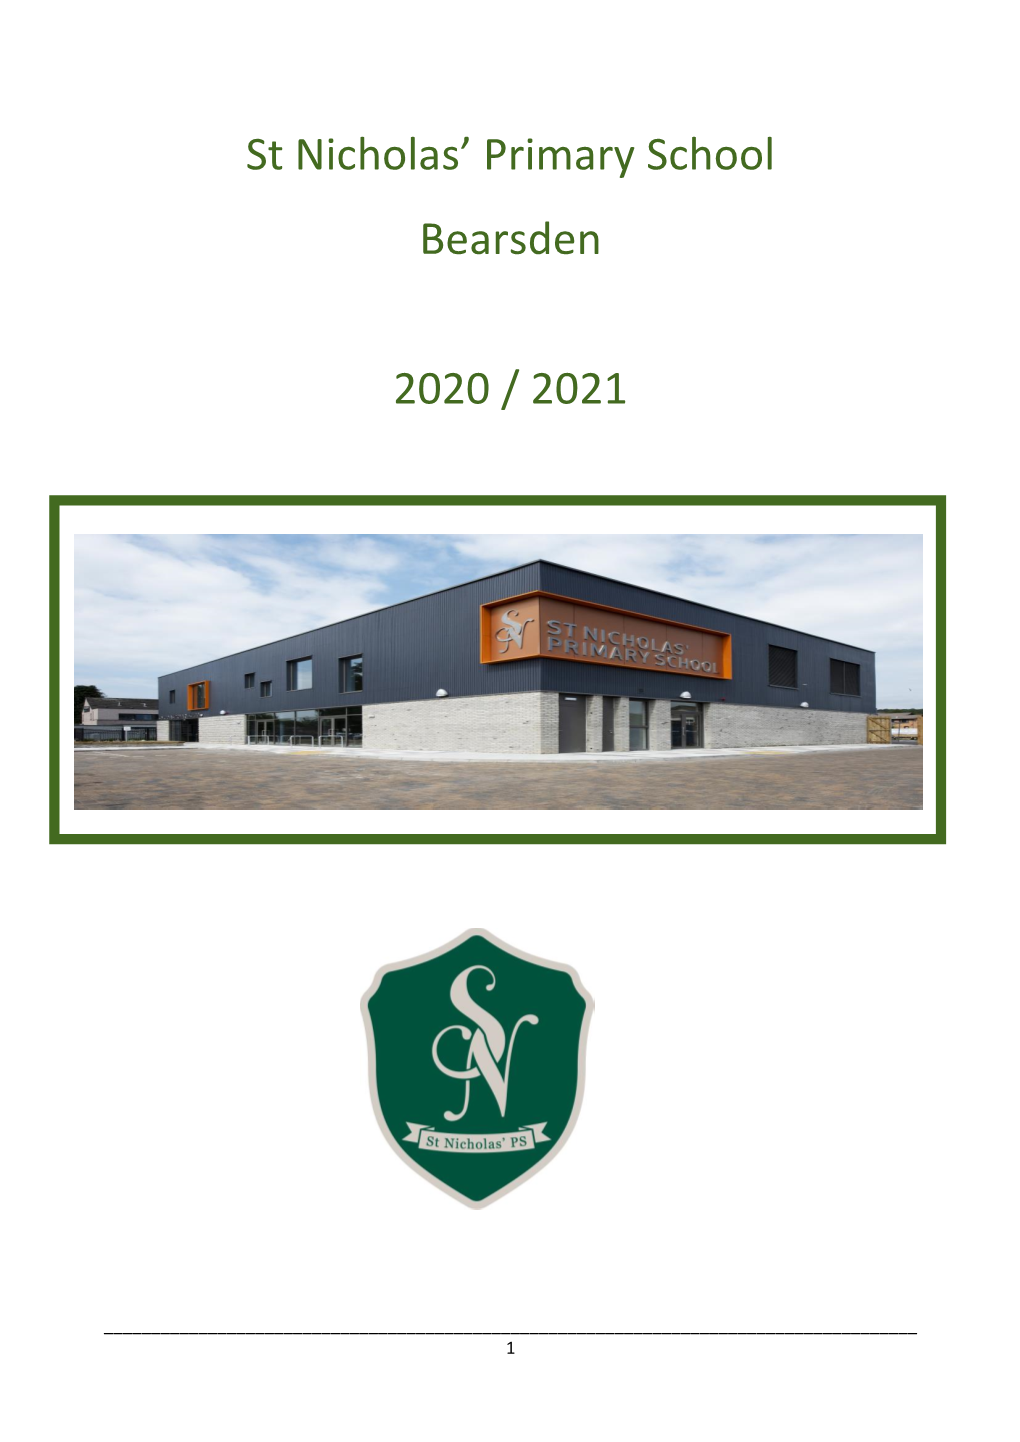 St Nicholas' Primary School Bearsden 2020 / 2021